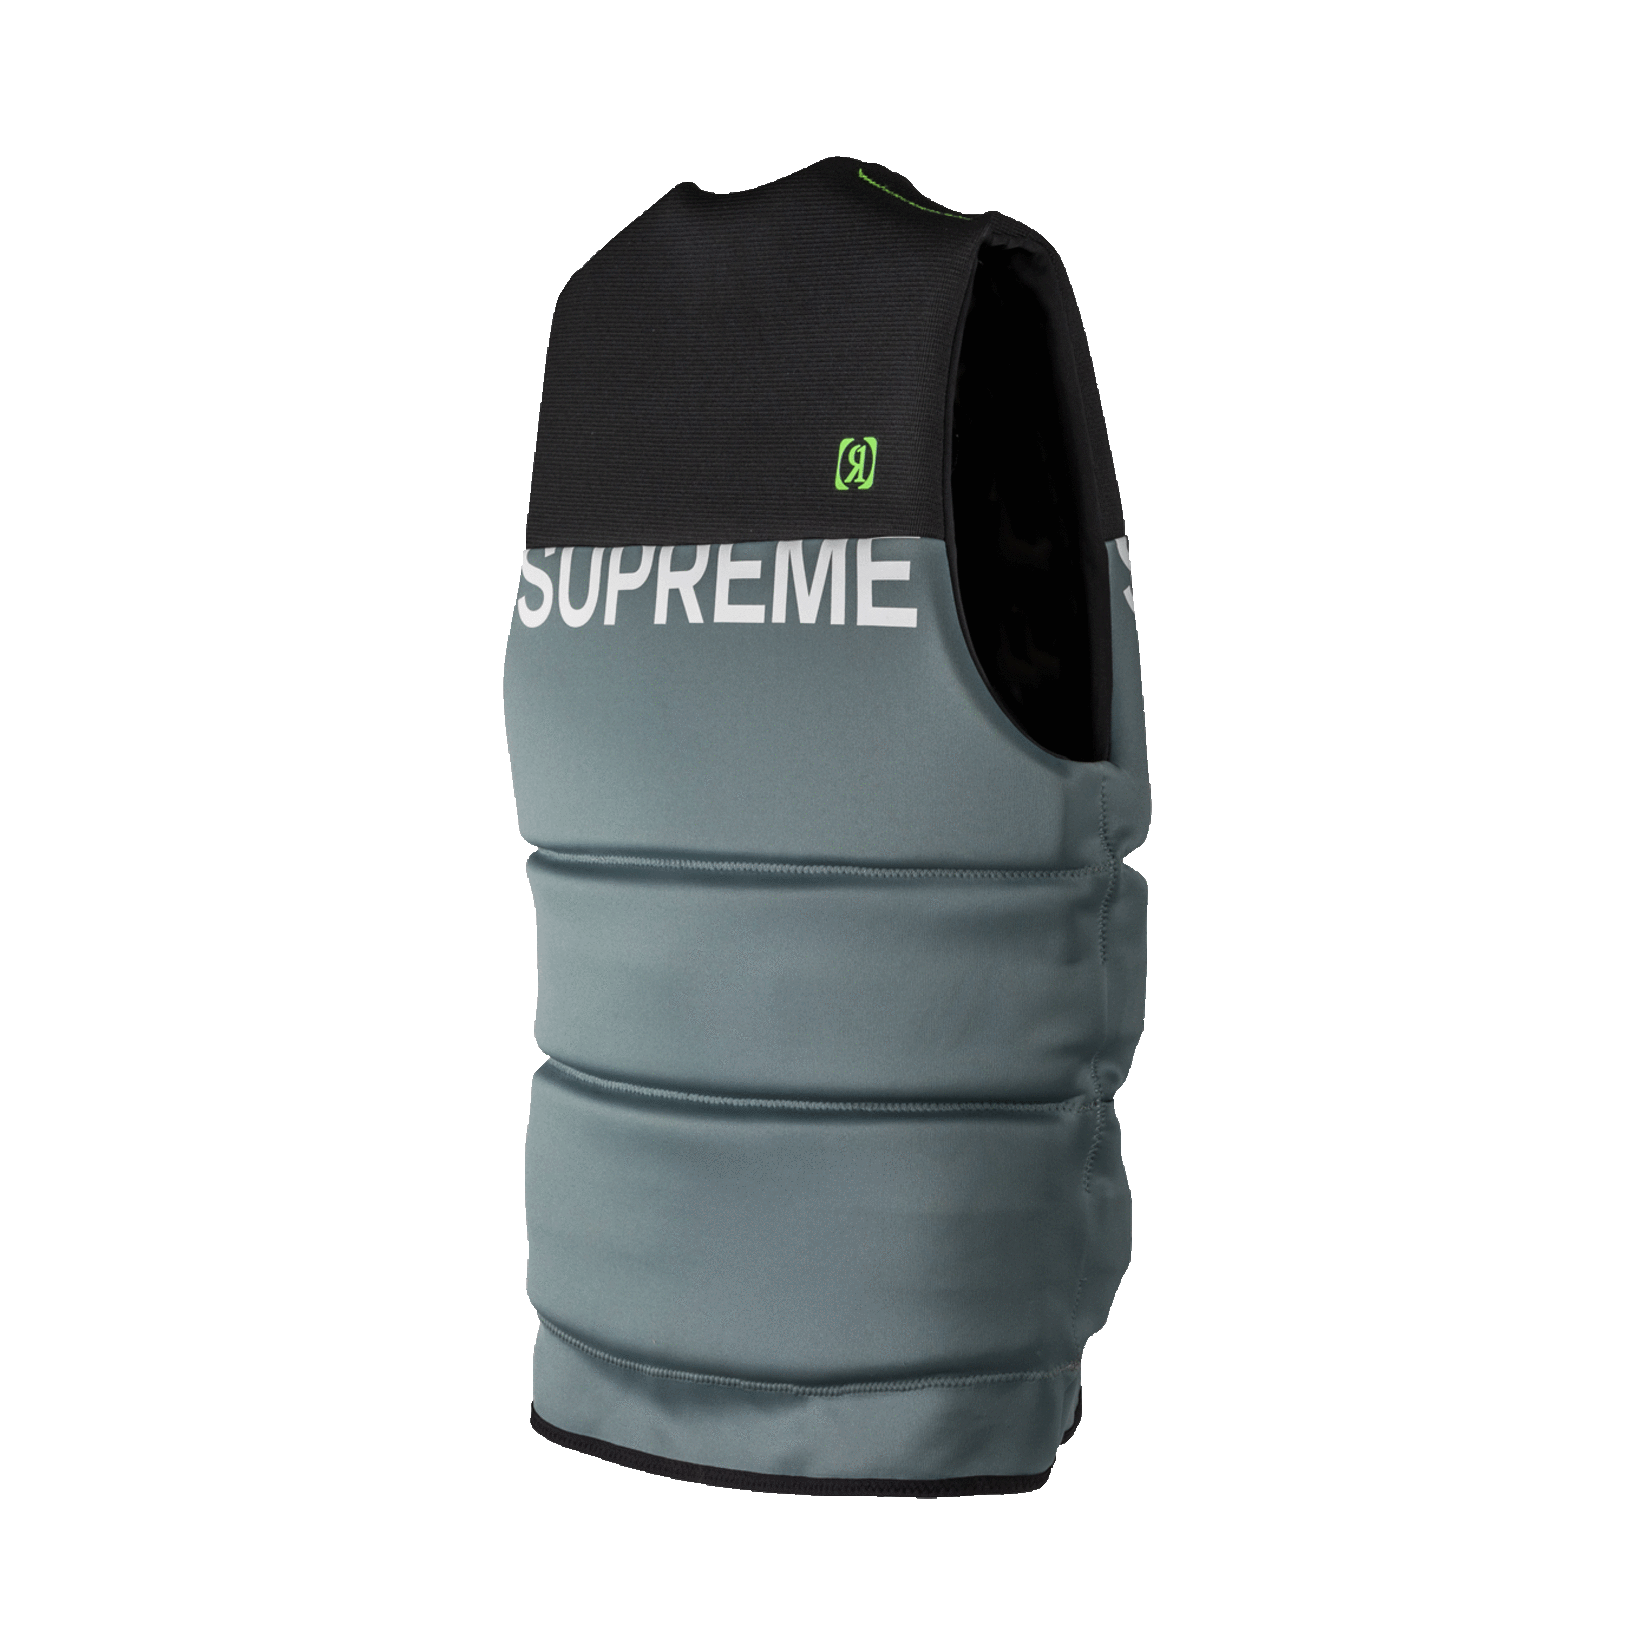 Supreme - Yes - US/CA CGA Life Vest - Charcoal Grey / Black - Sun 